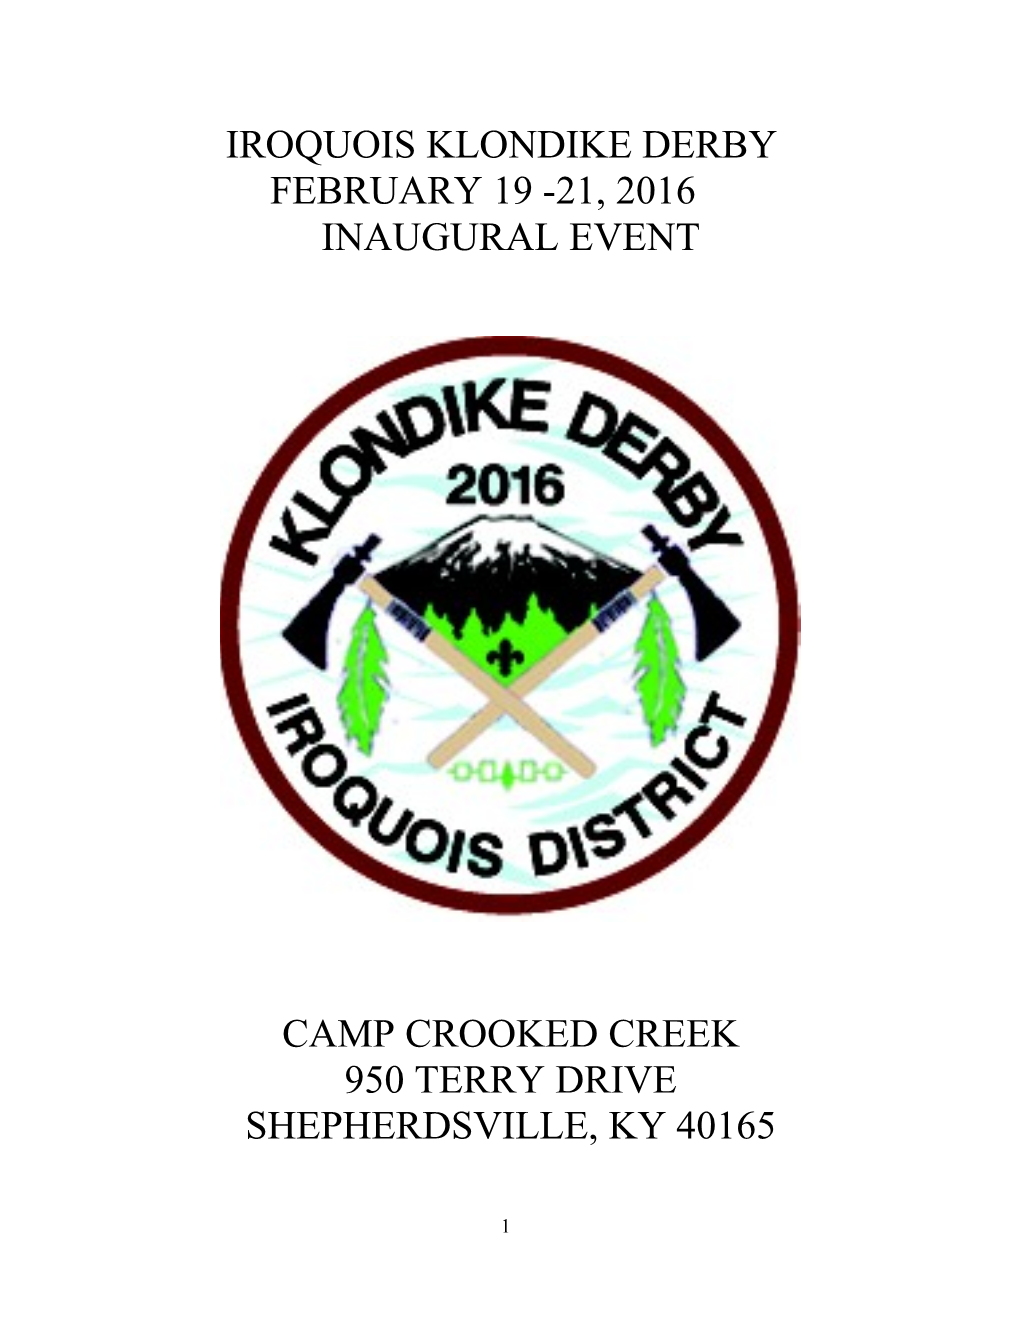 Iroquois Klondike Derby February 19 -21, 2016